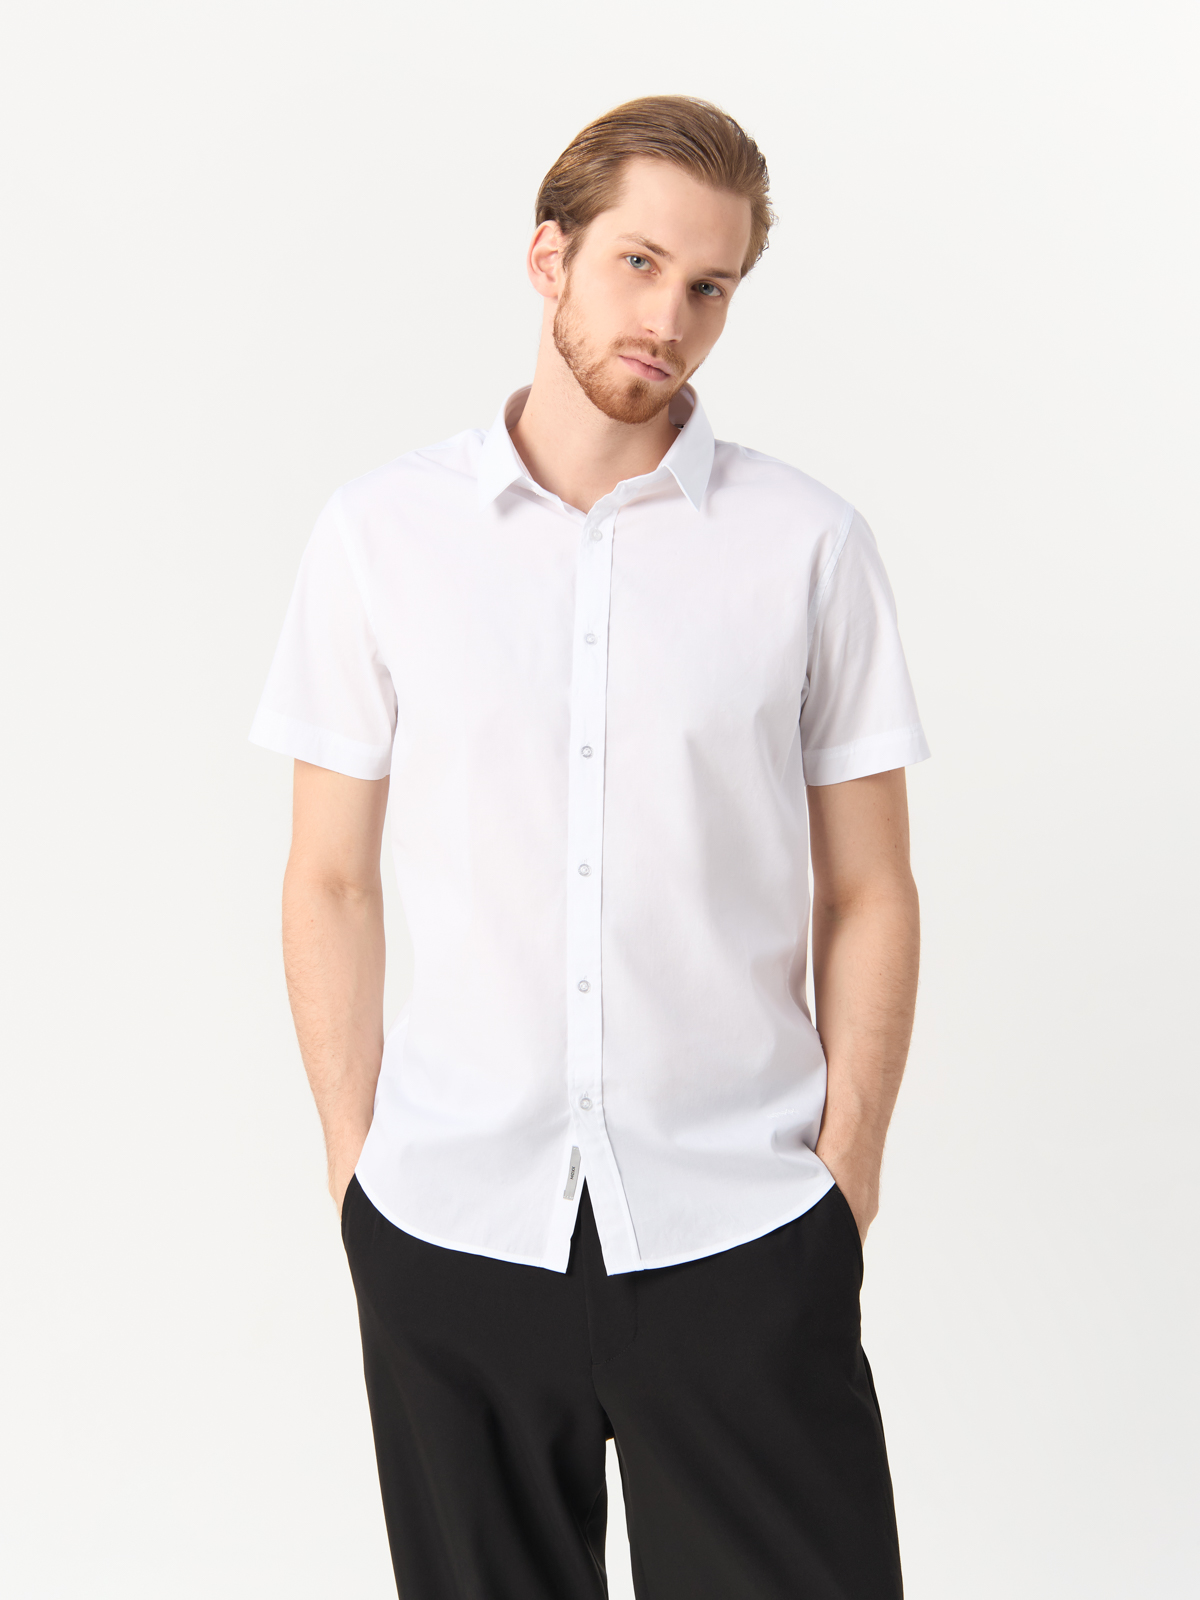 Рубашка мужская MEXX 110601 белая L